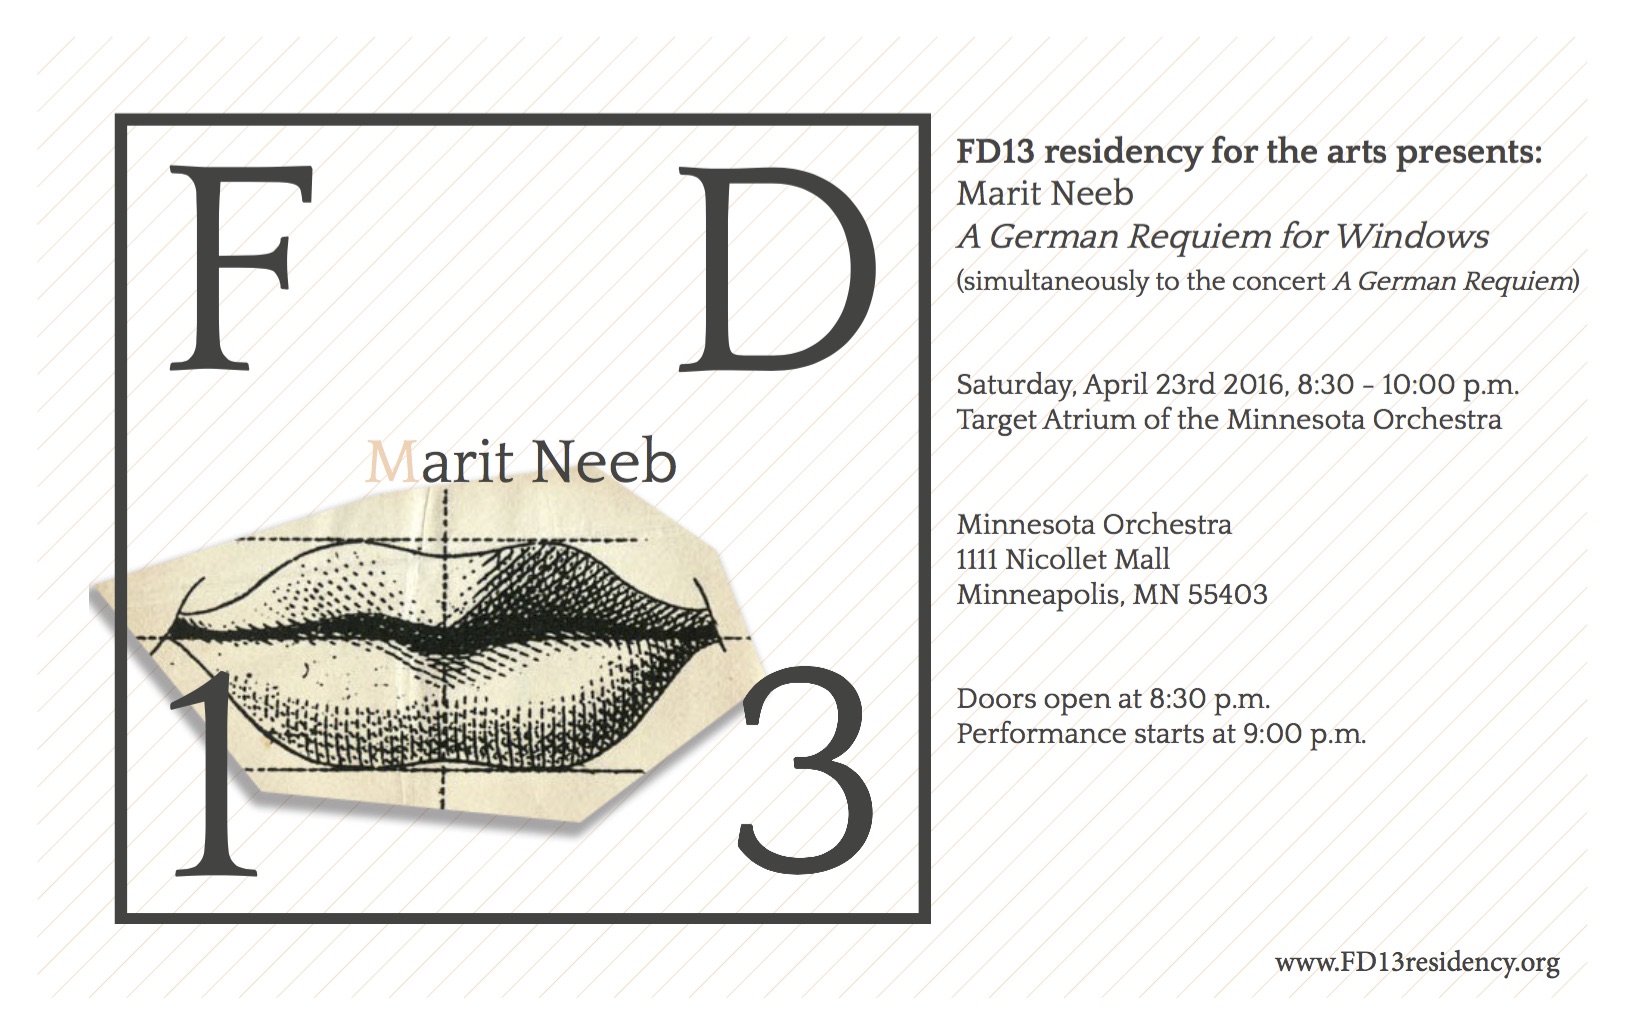 FD13 presents: Marit Neeb. A German Requiem for Windows. Saturday, 23 April 2016, 8.30 – 10 pm. Target Atrium, Minnesota Orchestra.